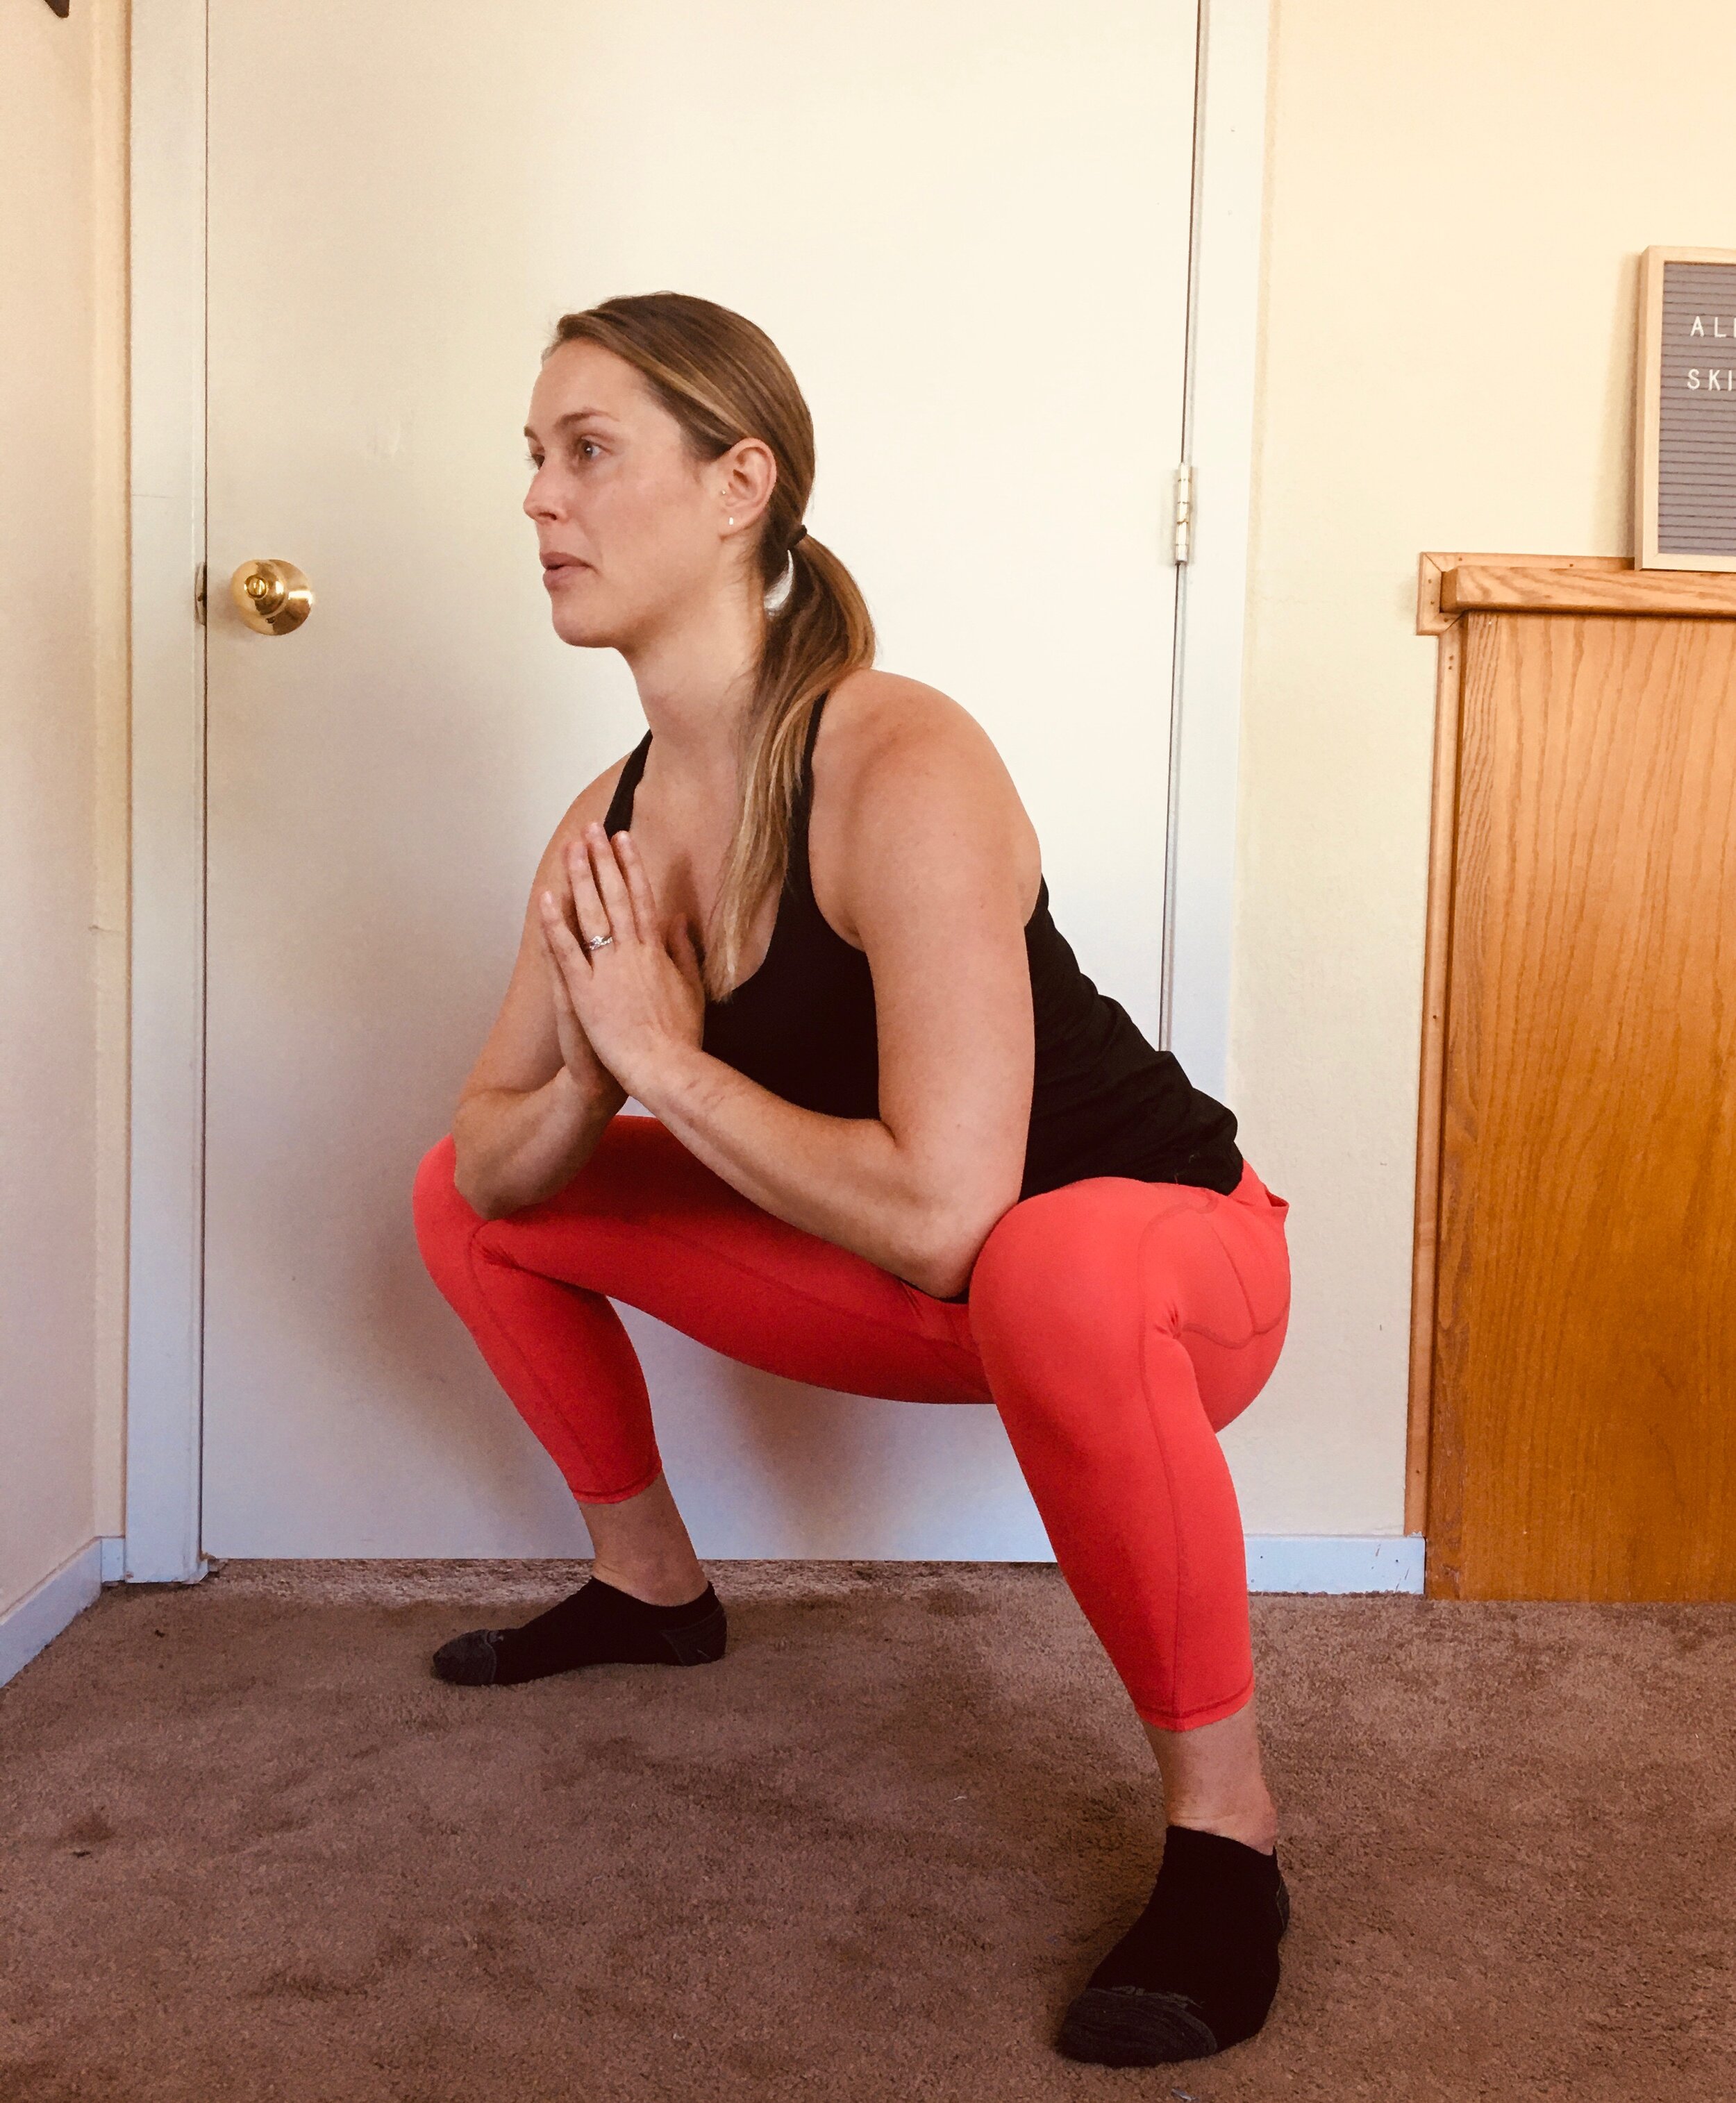 deep squat w/ elbows touching knees